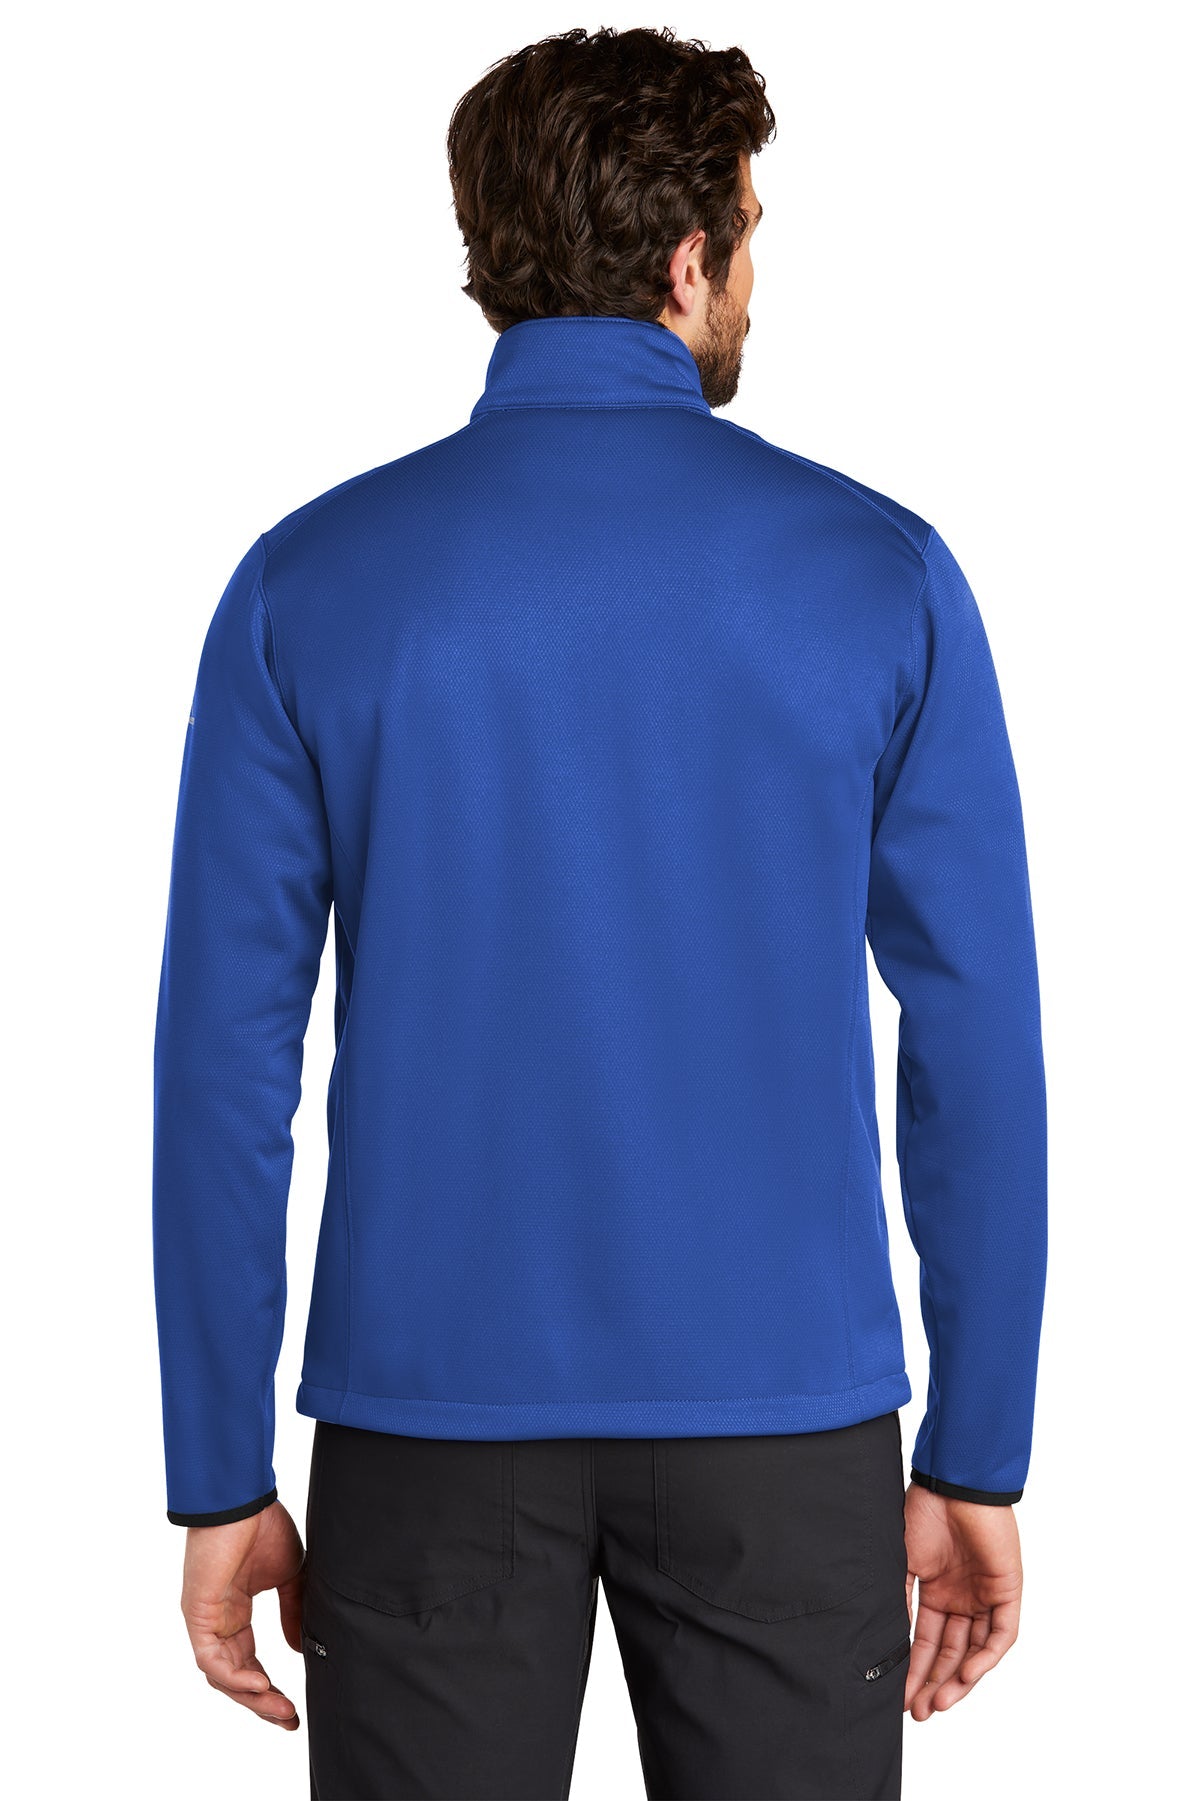 eddie bauer_eb538 _cobalt blue_company_logo_jackets